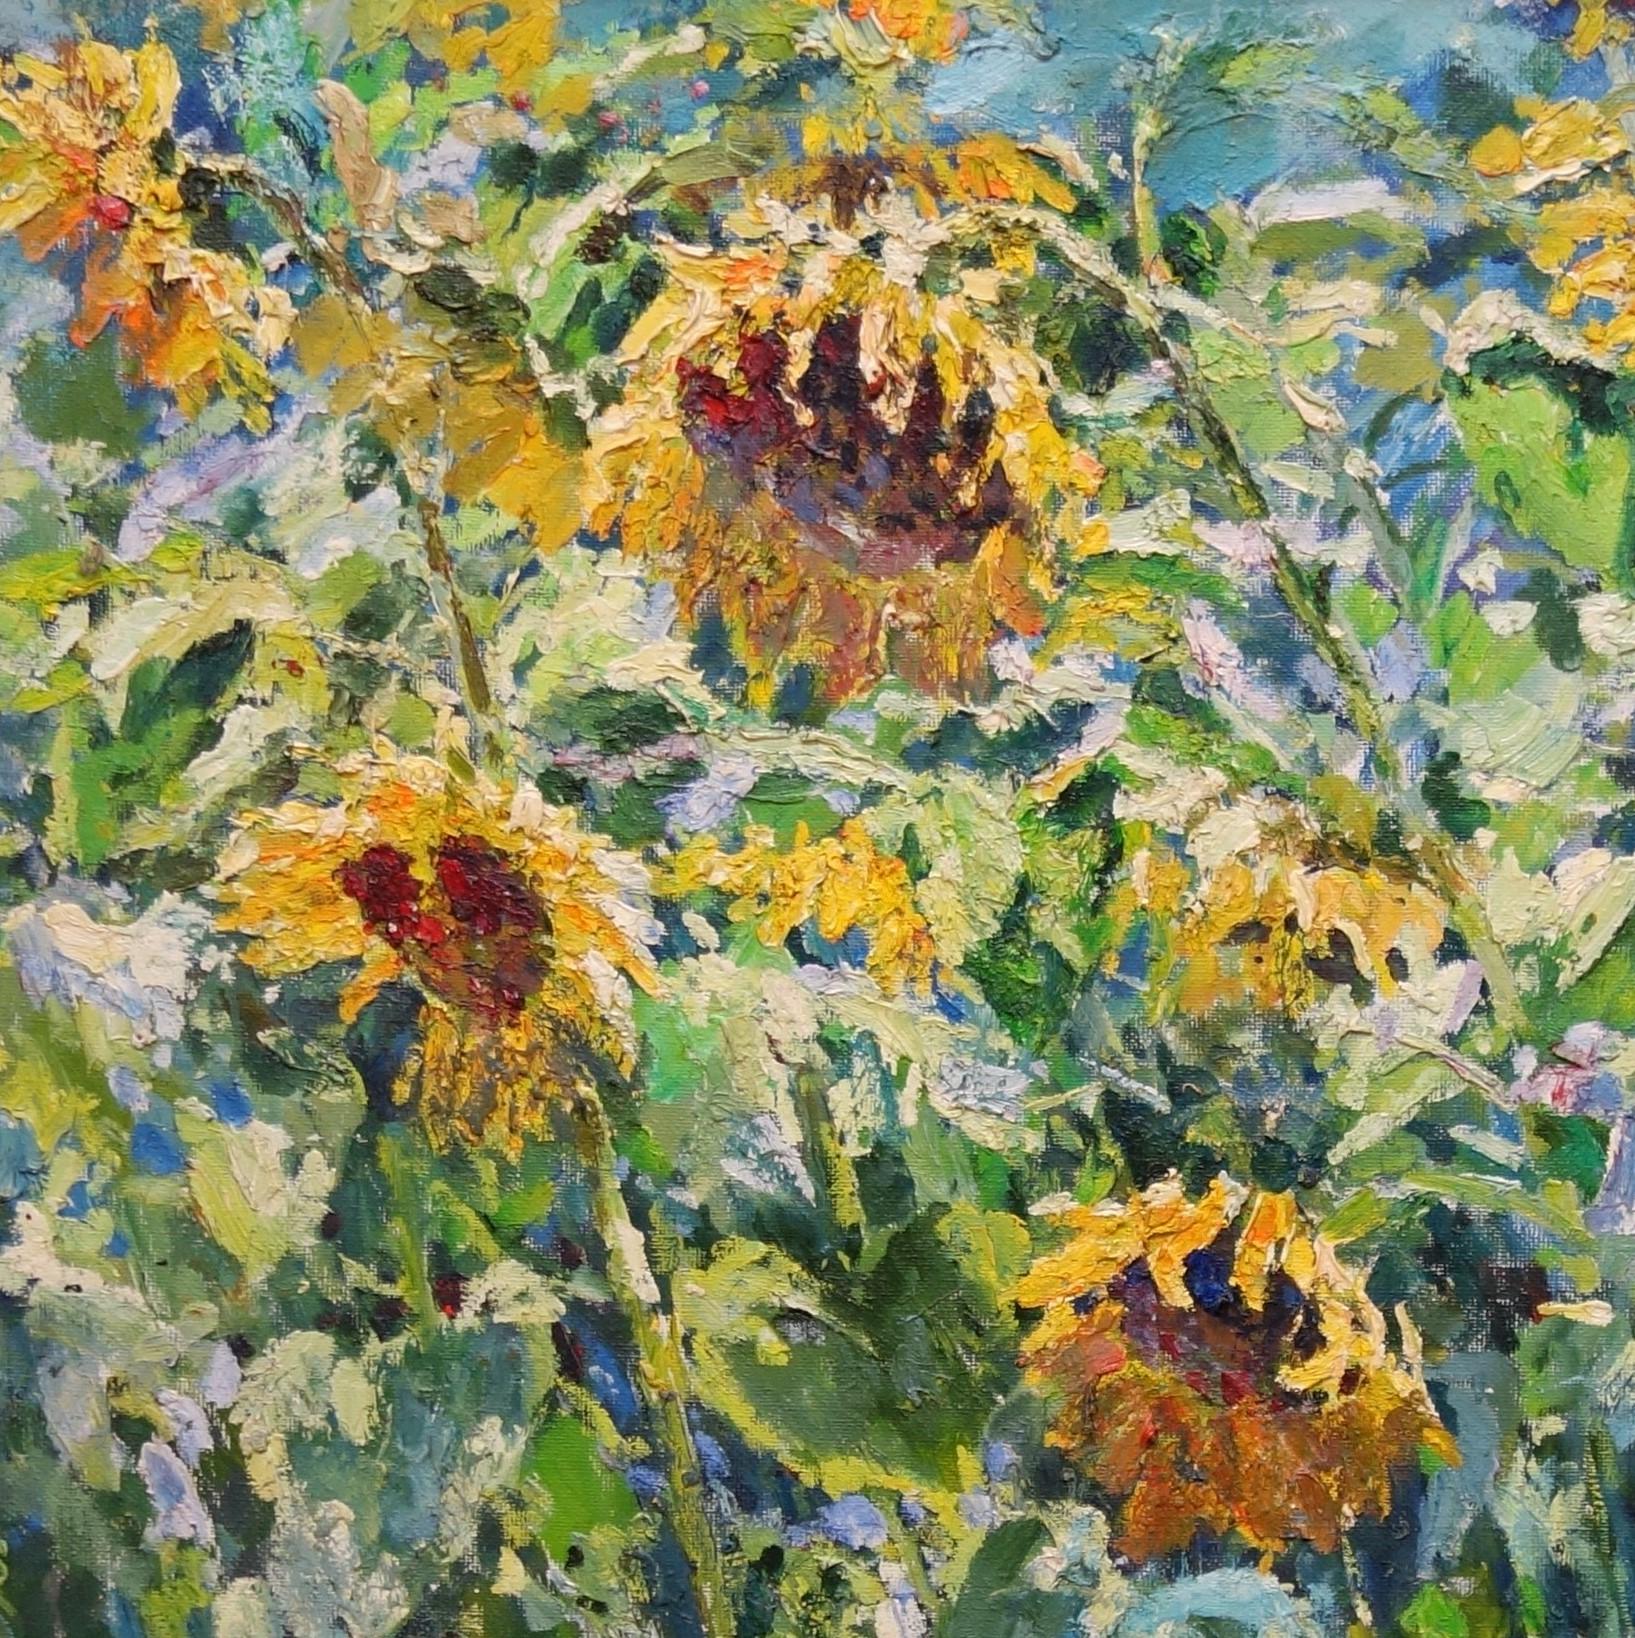 Sunflowers,Impressionists, Child, Dog, Nature,


Georgij MOROZ (Dneprodzerzinsk, Ucraina, 1937 - St. Petersburg, 2015)

1937: he was born in Dneprodzerzinsk, Ucraina.
1949-56: he began artistic studies in Dneprodzerzinsk and later he attended the